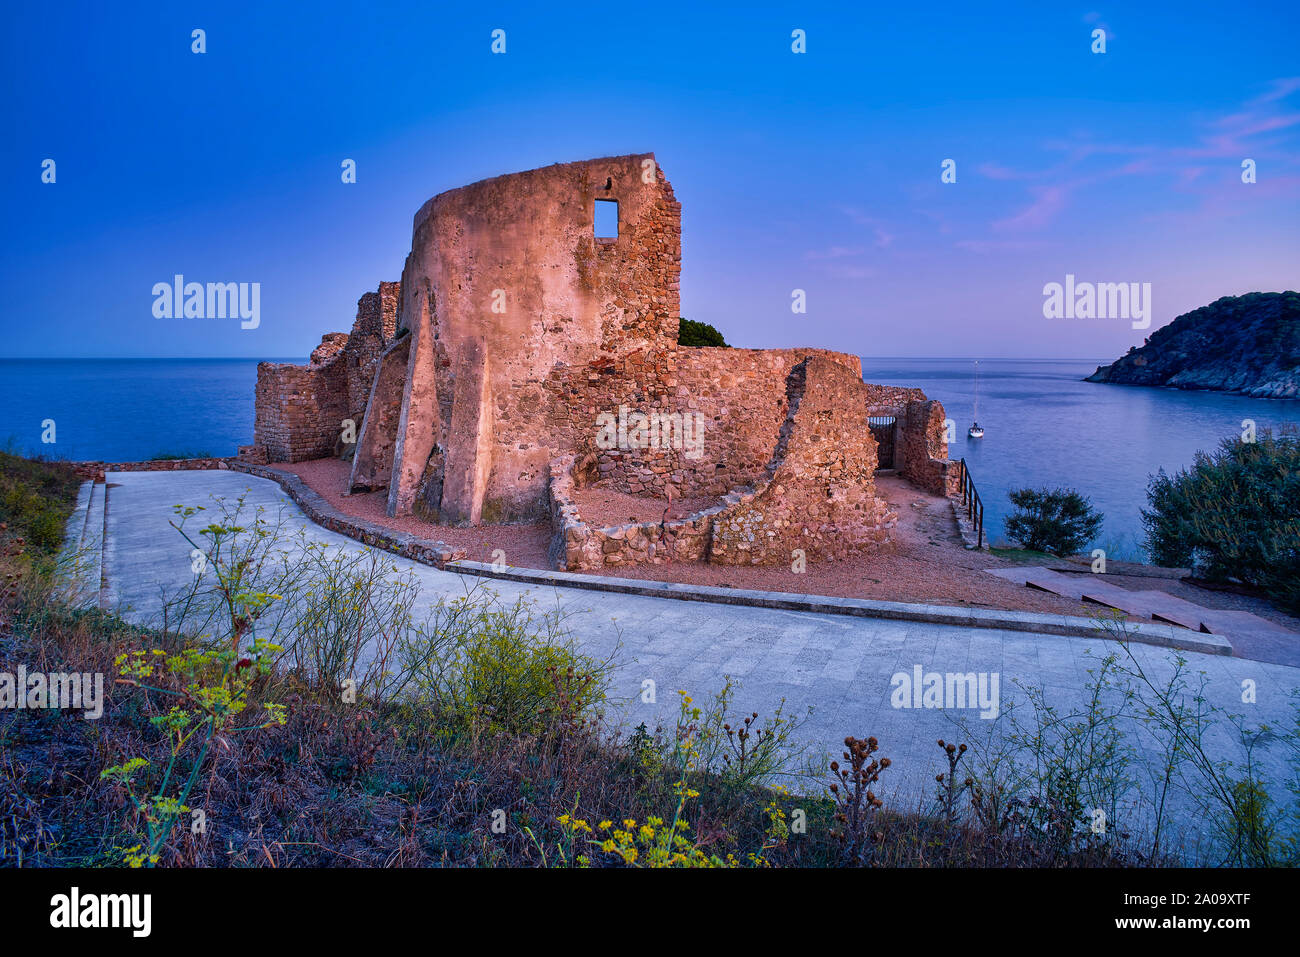 Castle of Sant Esteve at nightfall. La Fosca Cove. Palamos, Girona province, Catalonia, Spain. Stock Photo